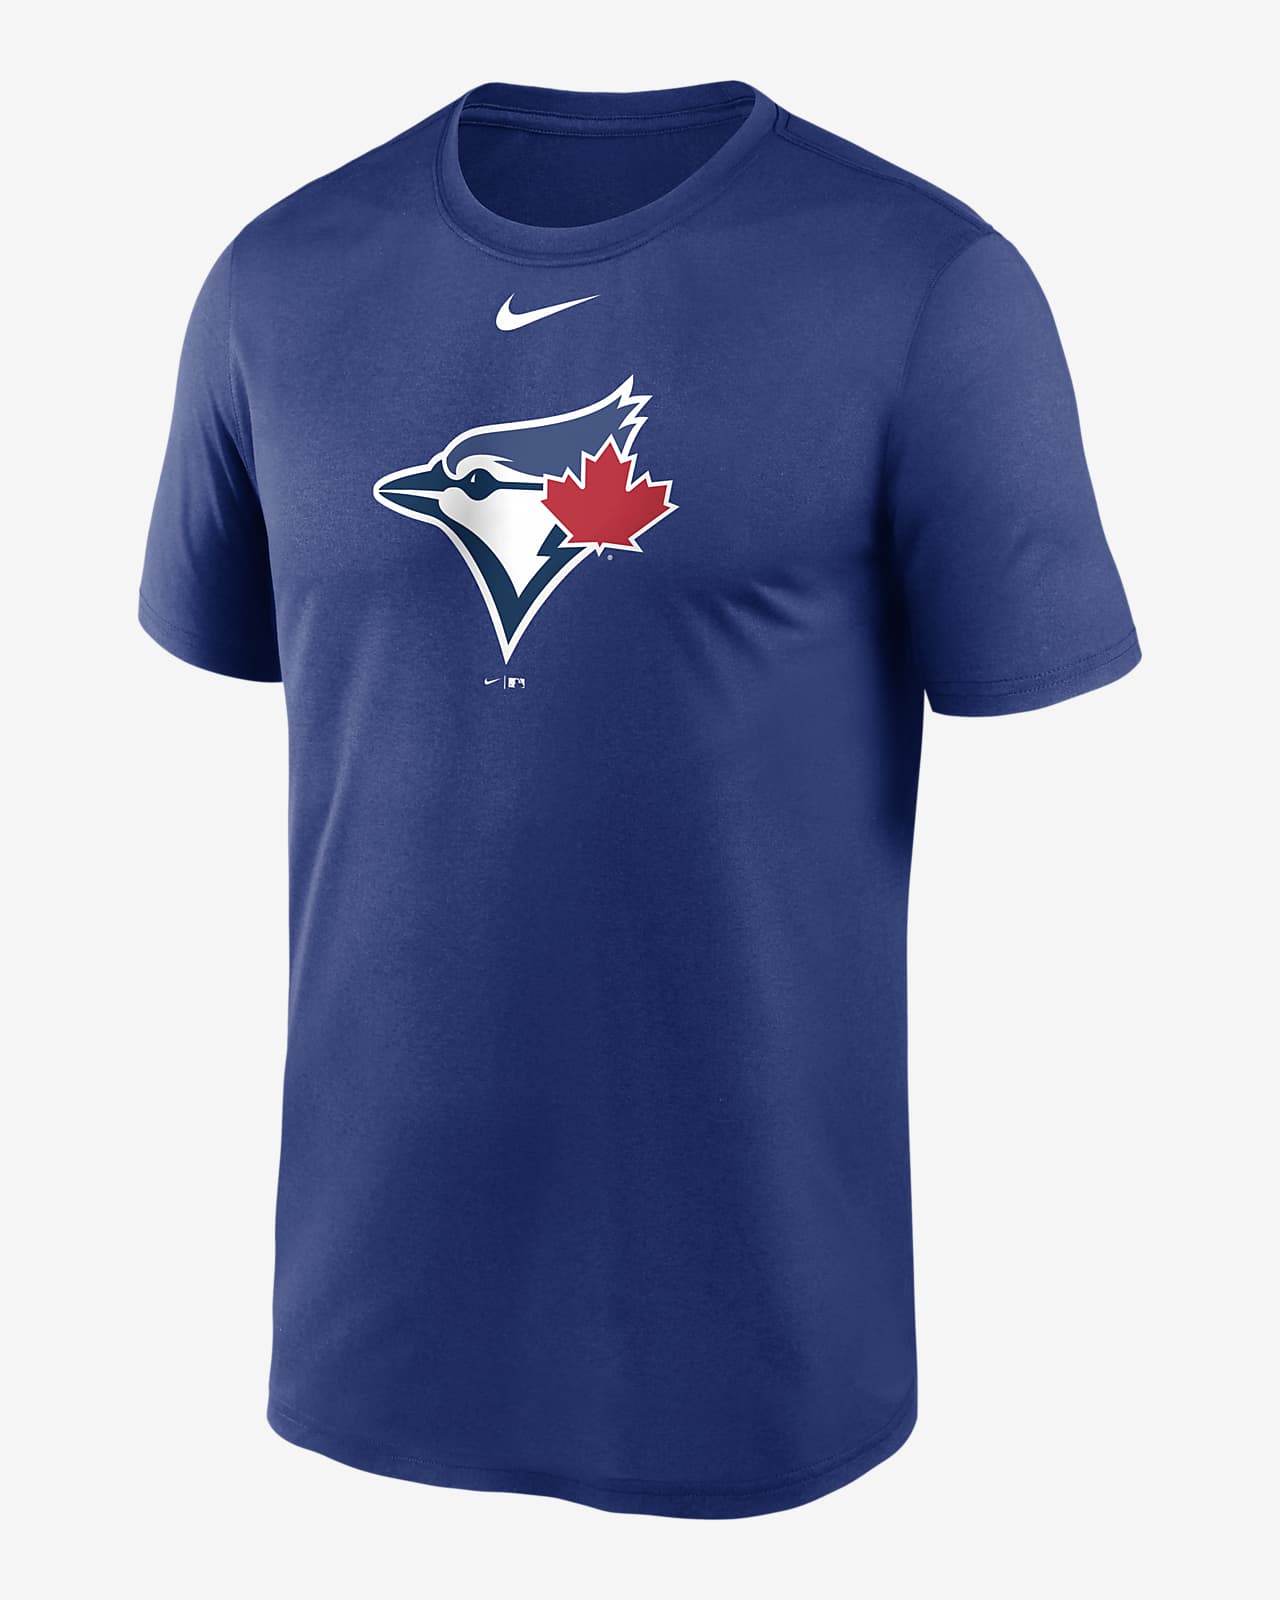 Toronto Blue Jays T-Shirts, Blue Jays Tees, Toronto Blue Jays Shirts